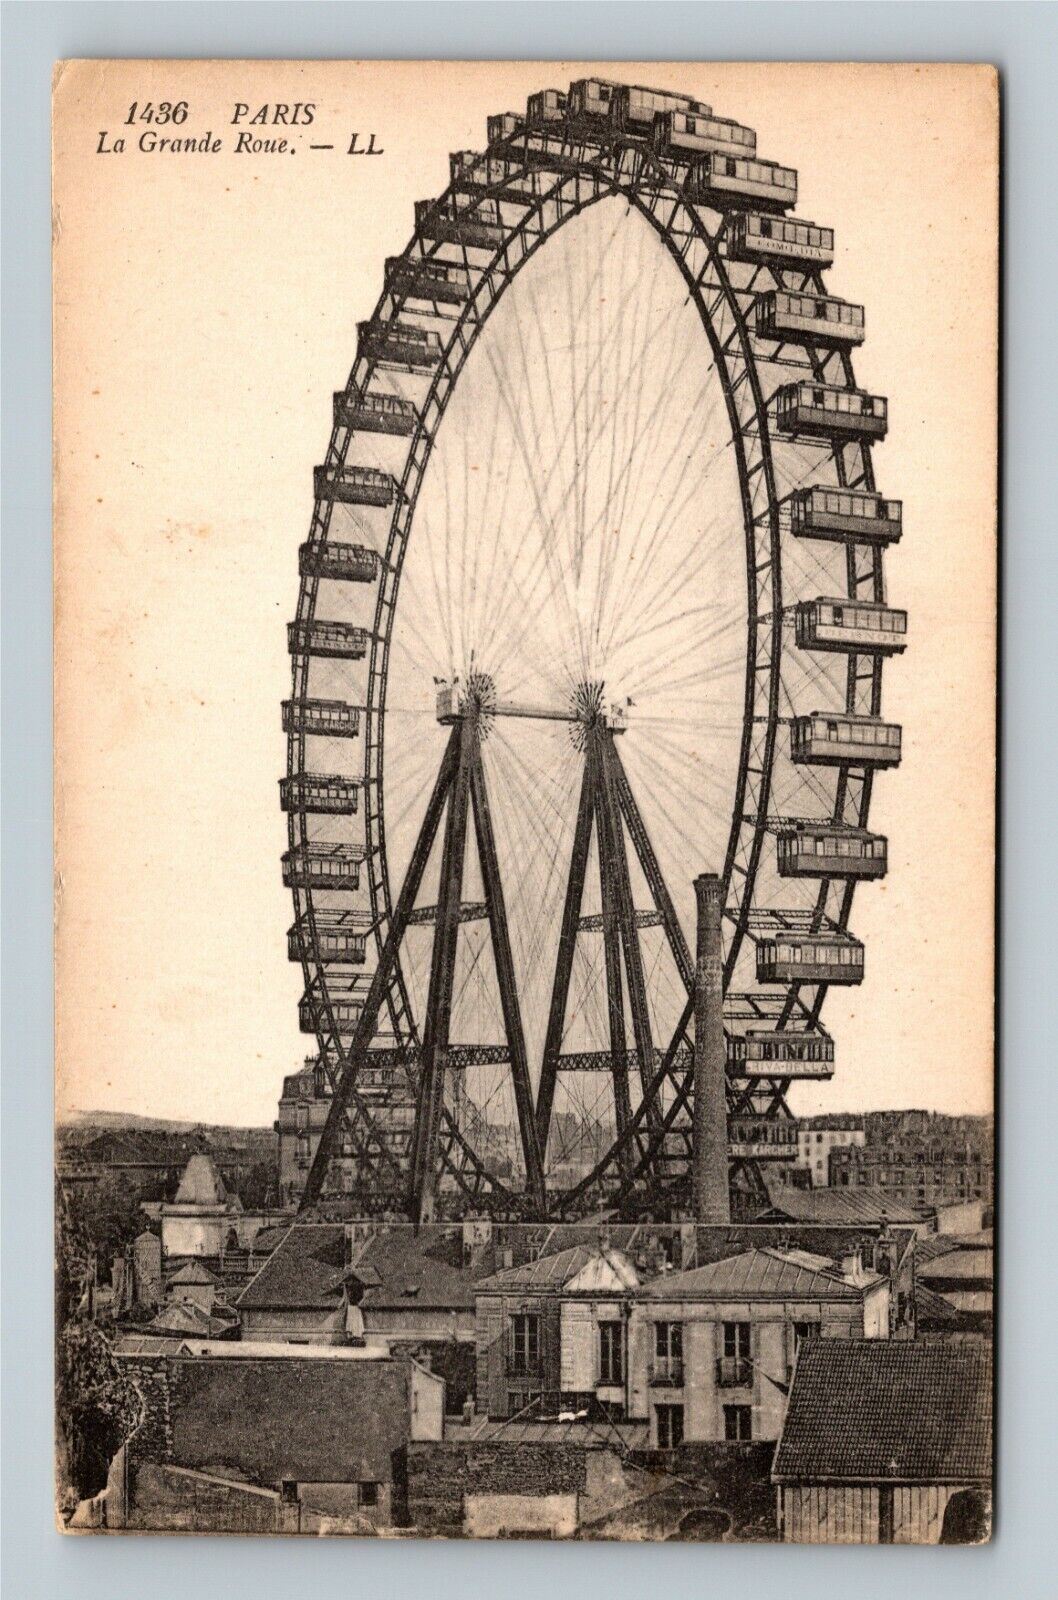 Paris, La Grande Roue Ferris Wheel, France Vintage Postcard